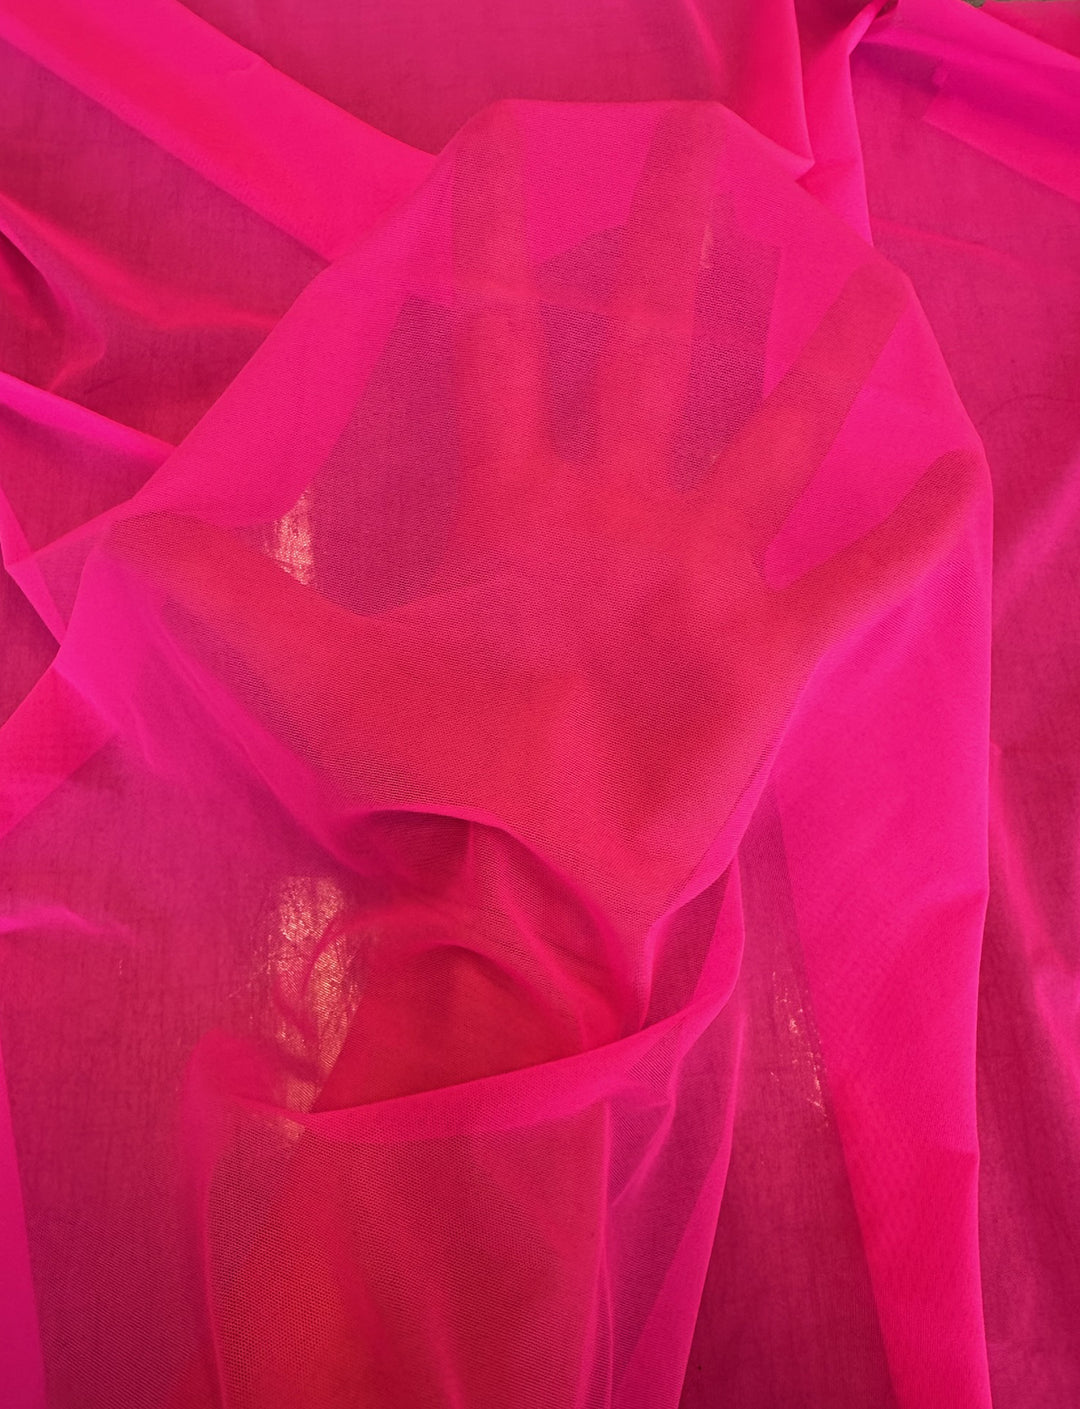 neon pink stretch mesh fabric